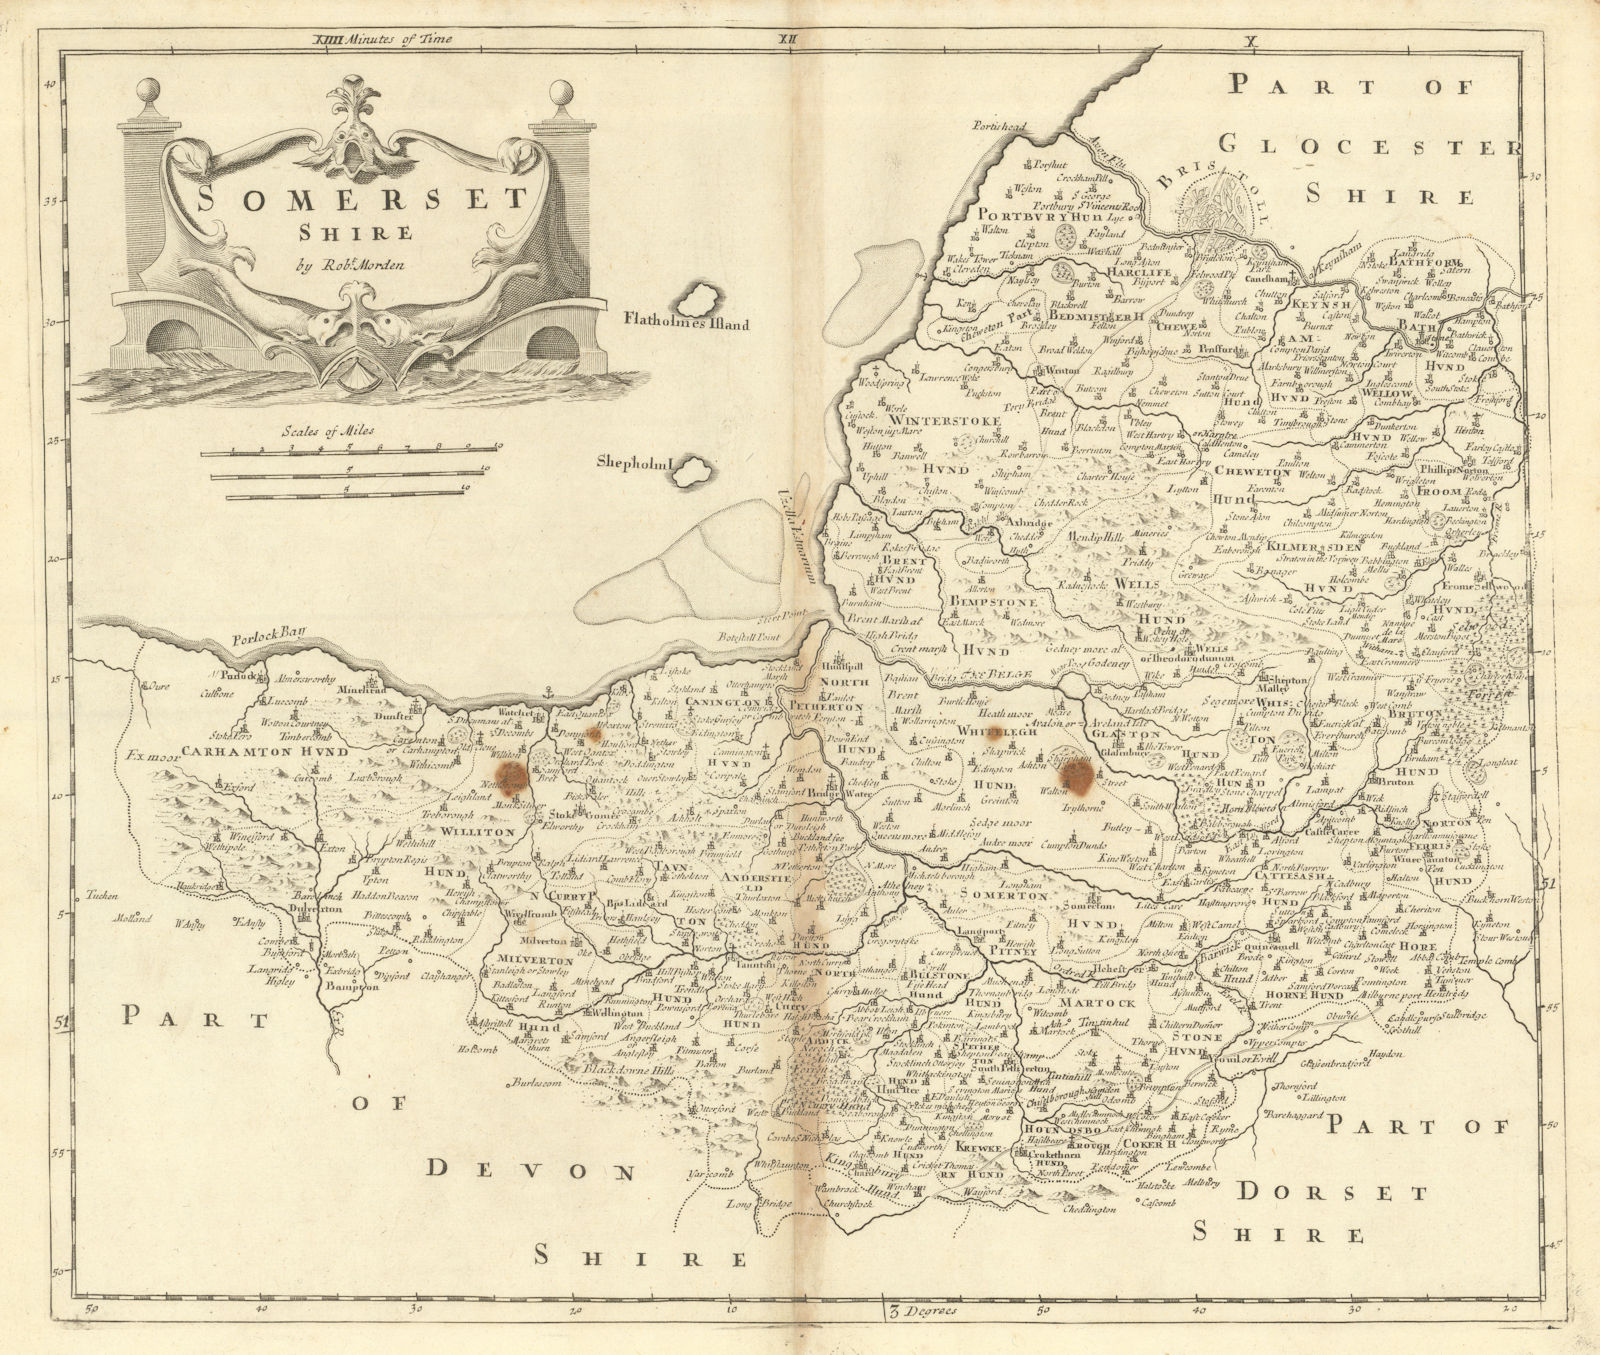 SOMERSET SHIRE by ROBERT MORDEN from Camden's Britannia. Bristol plan 1695 map